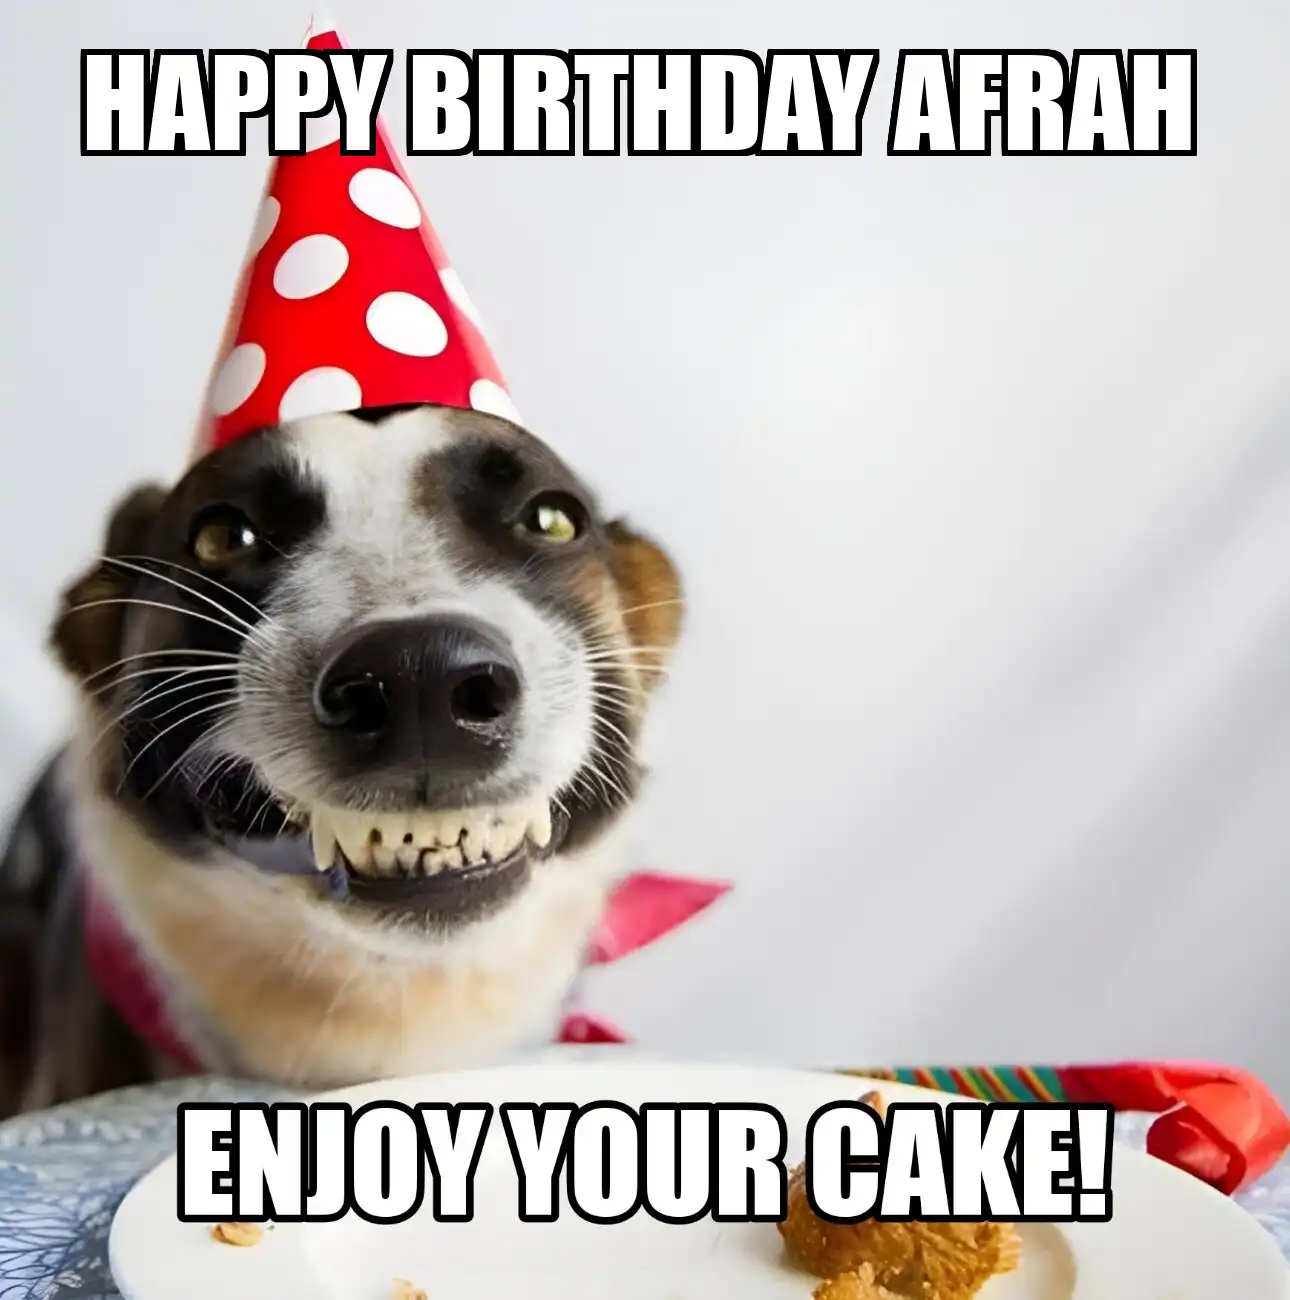 Happy Birthday Afrah Enjoy Your Cake Dog Meme